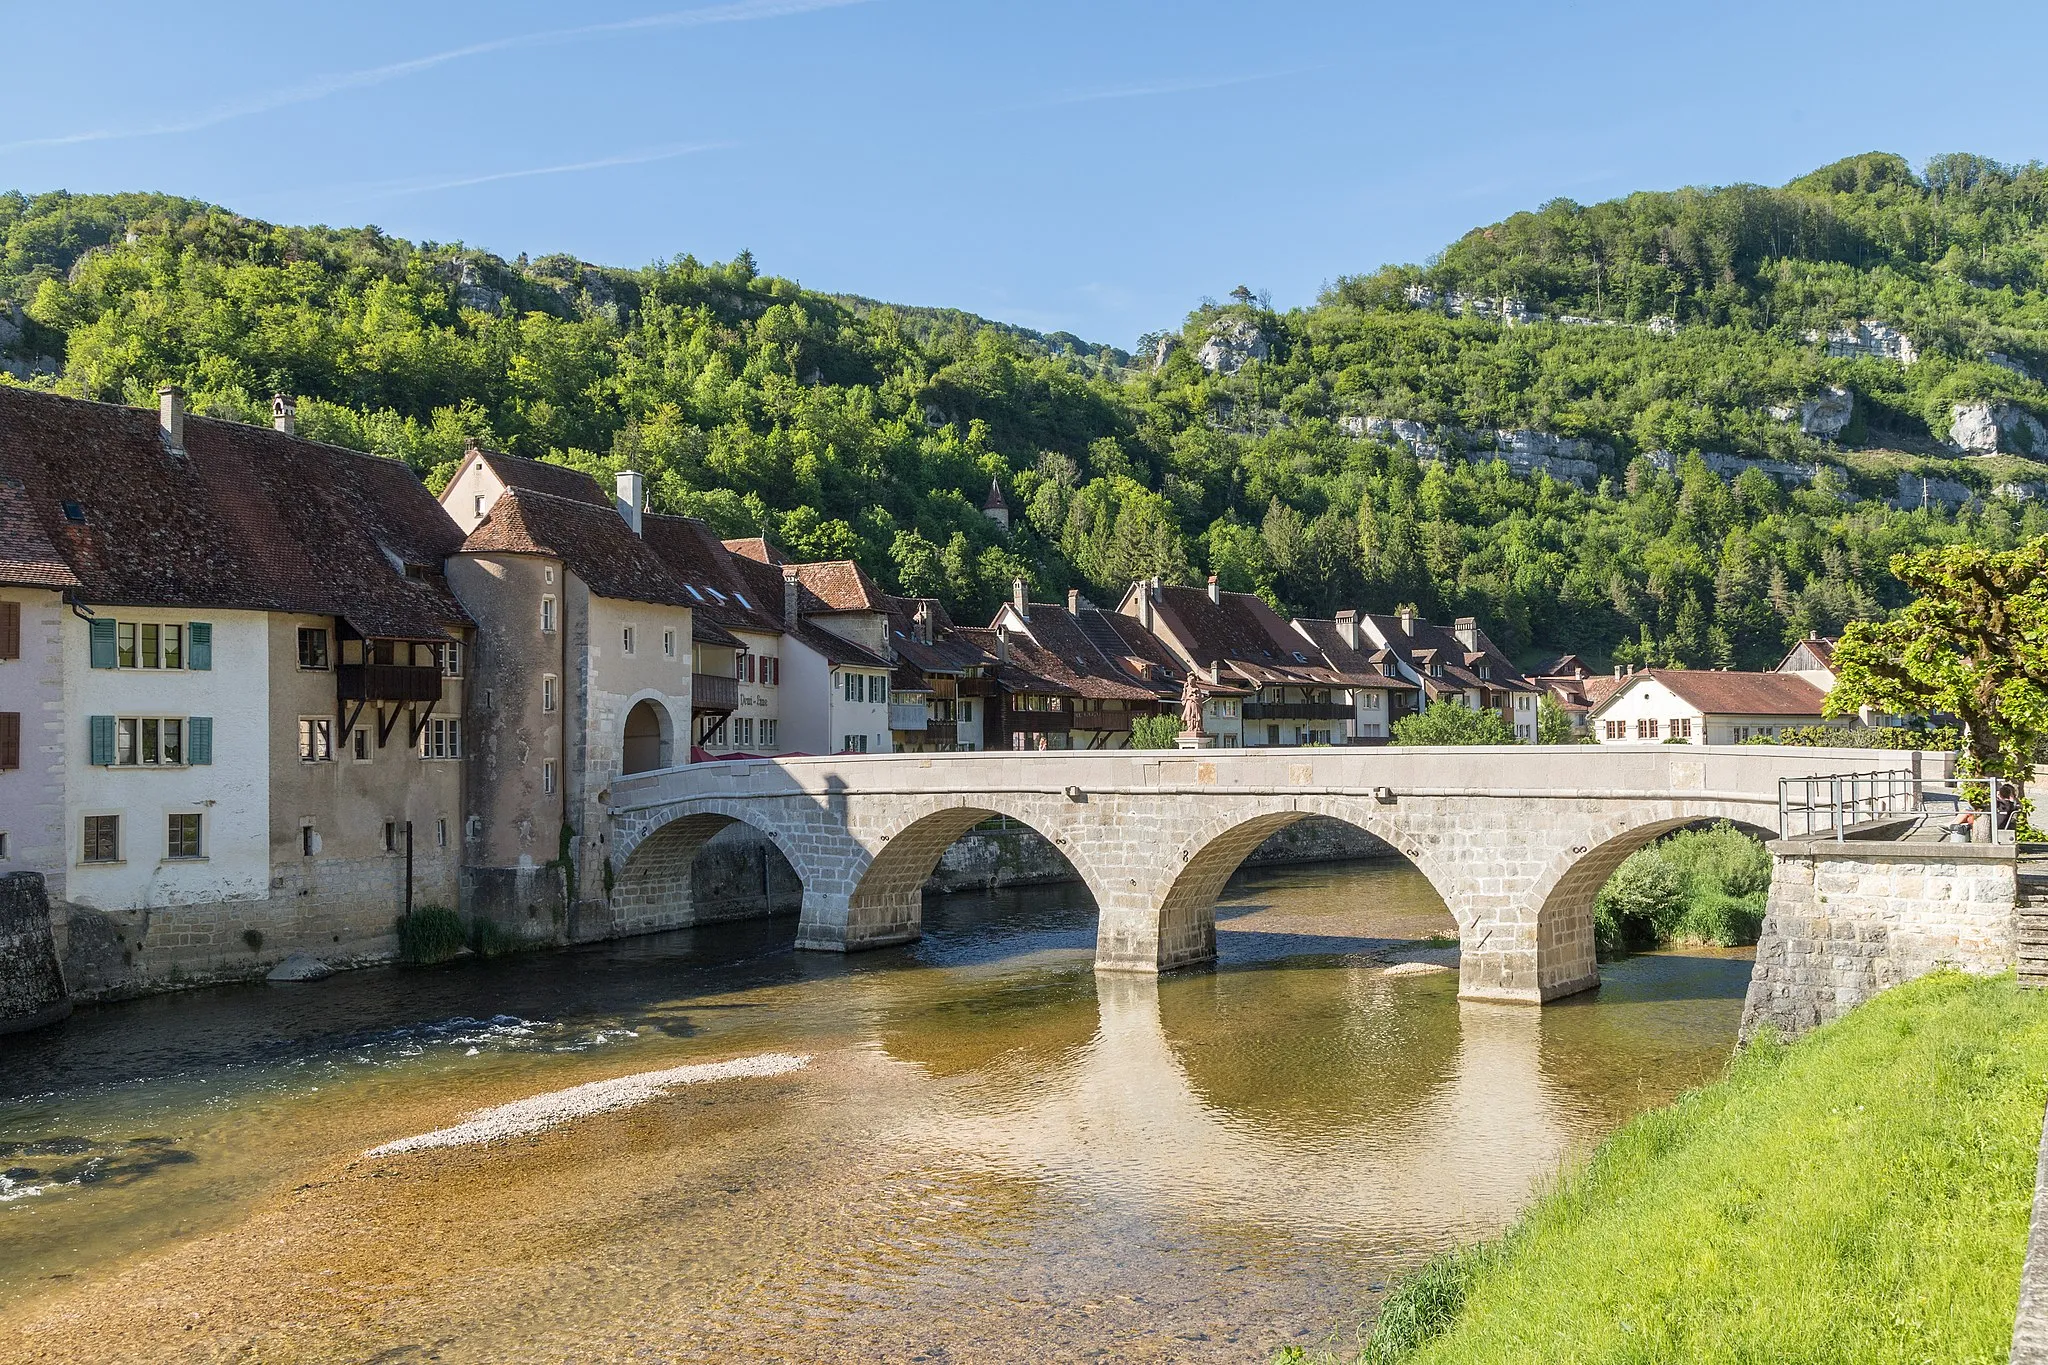 Photo showing: Historic stone bridge over River Doubs in Saint Ursanne, canton of Jura, Switzerland.